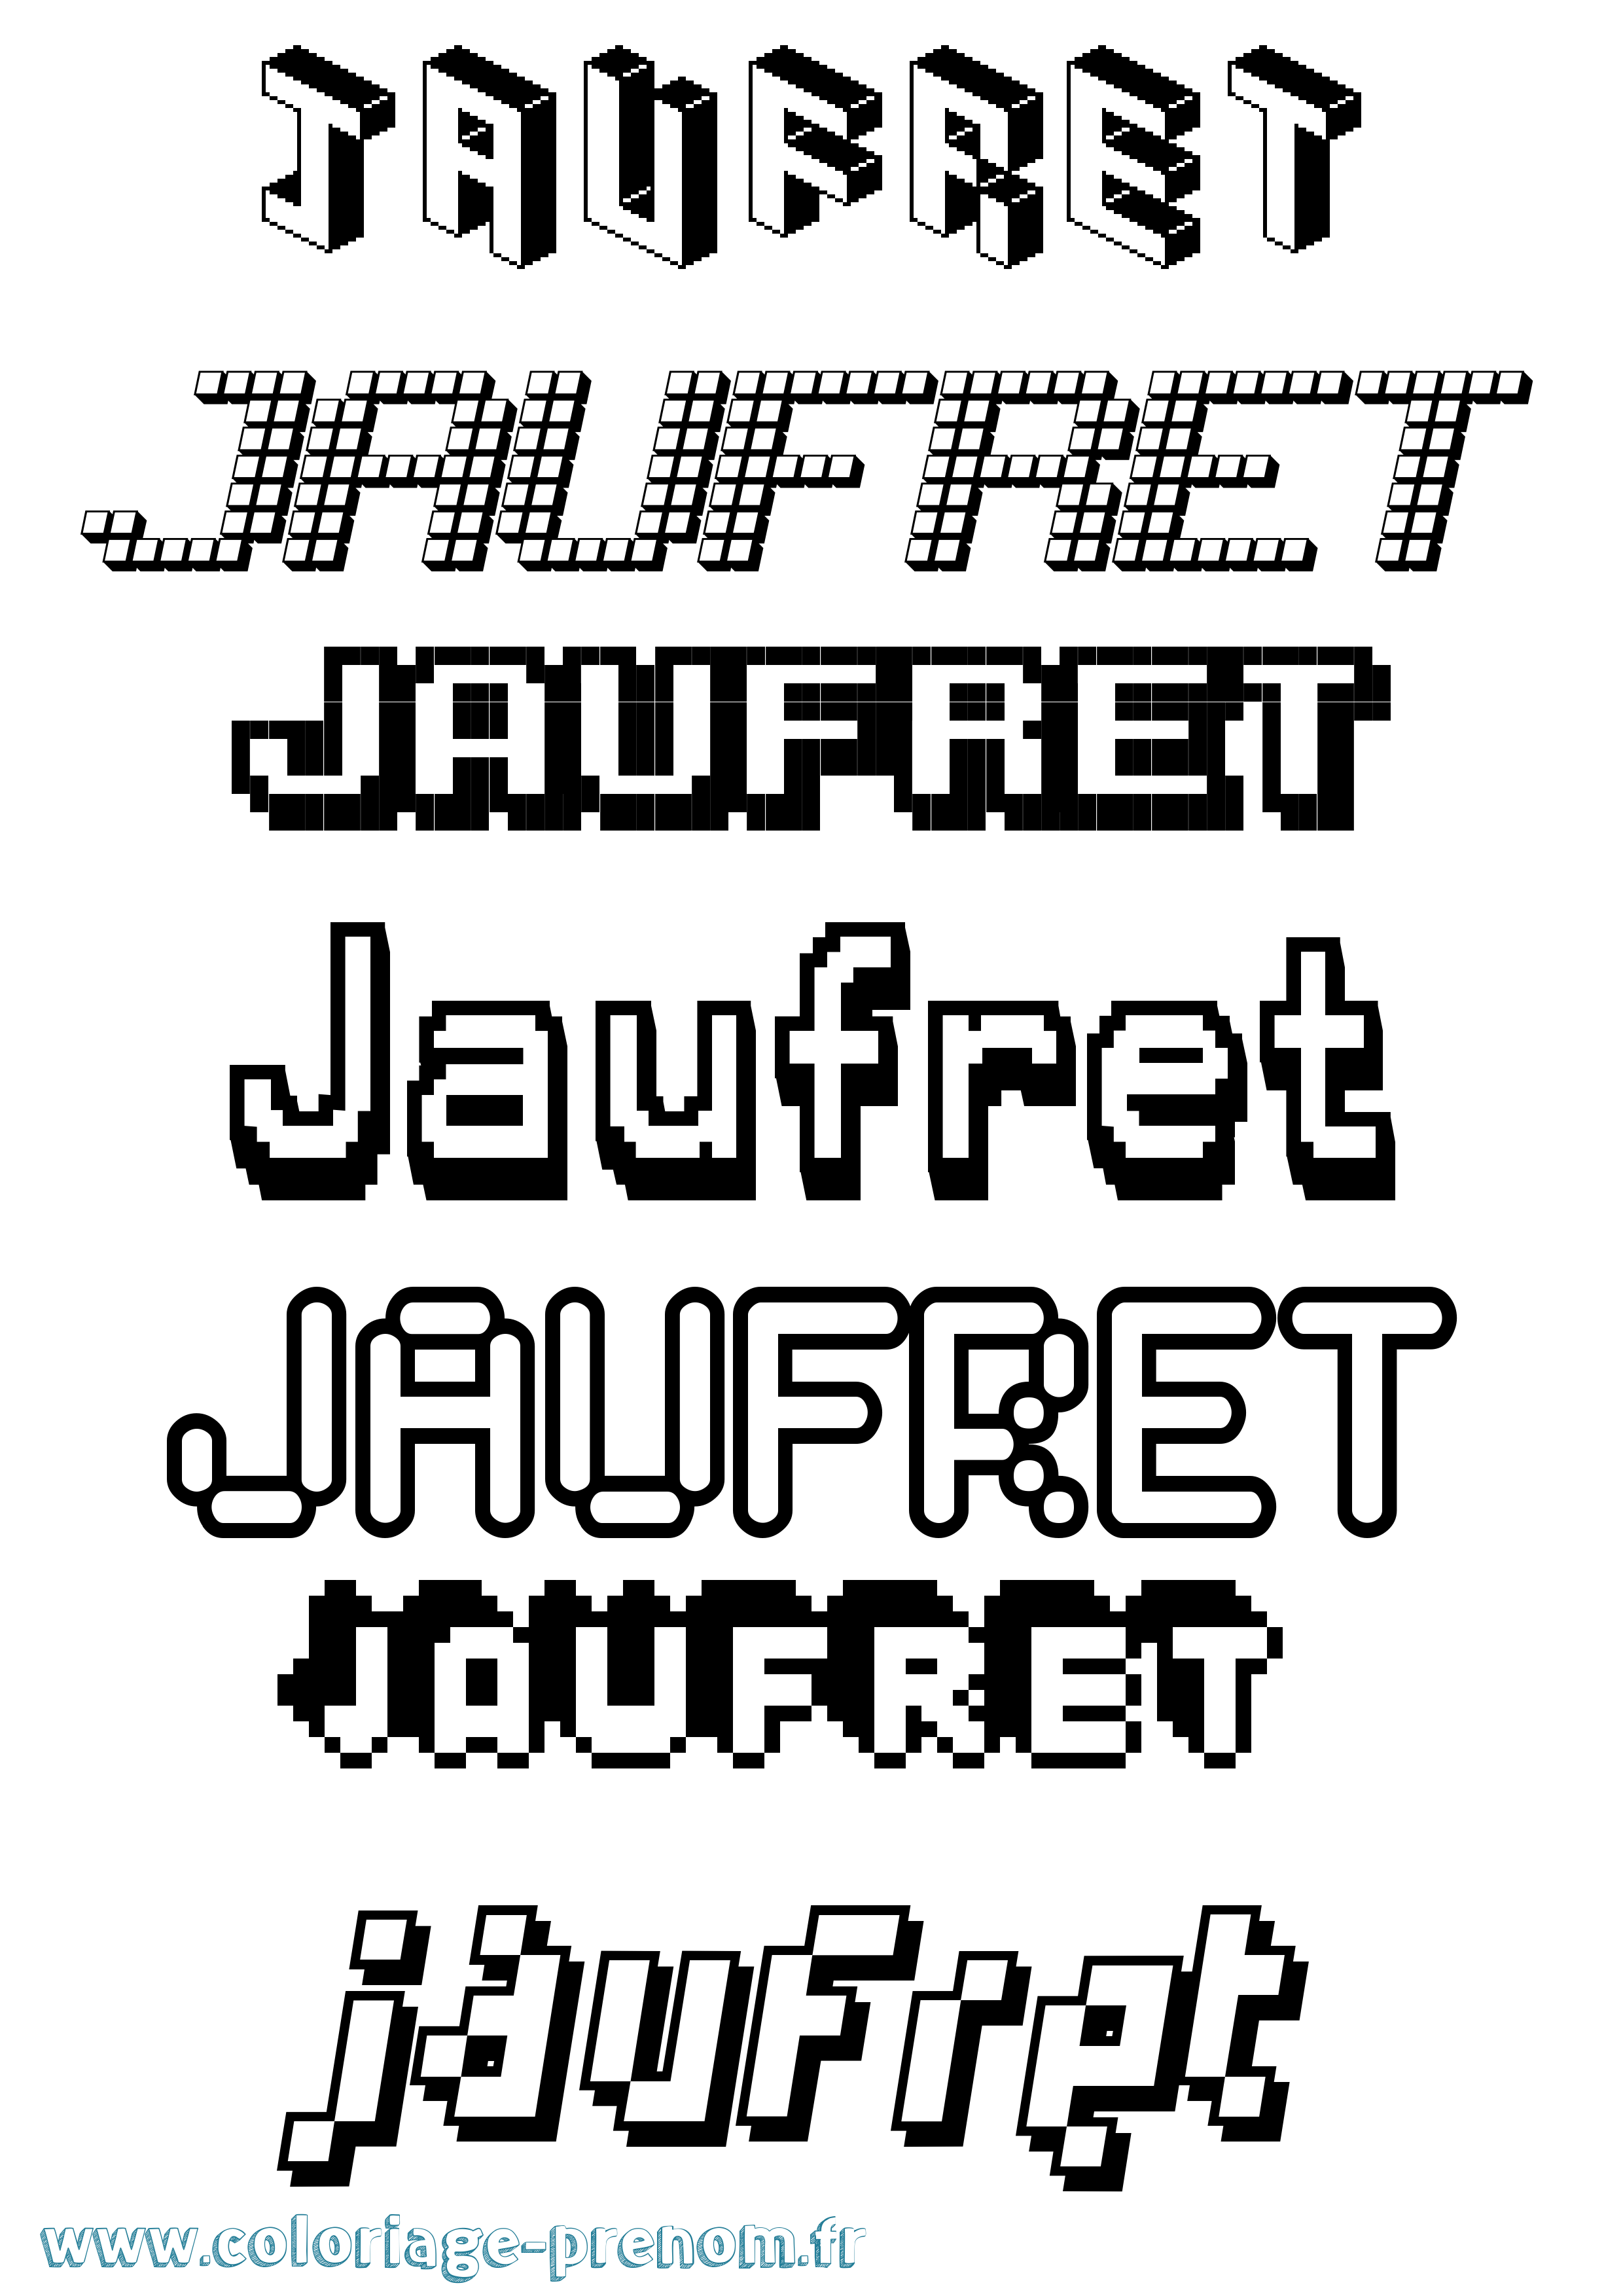 Coloriage prénom Jaufret Pixel